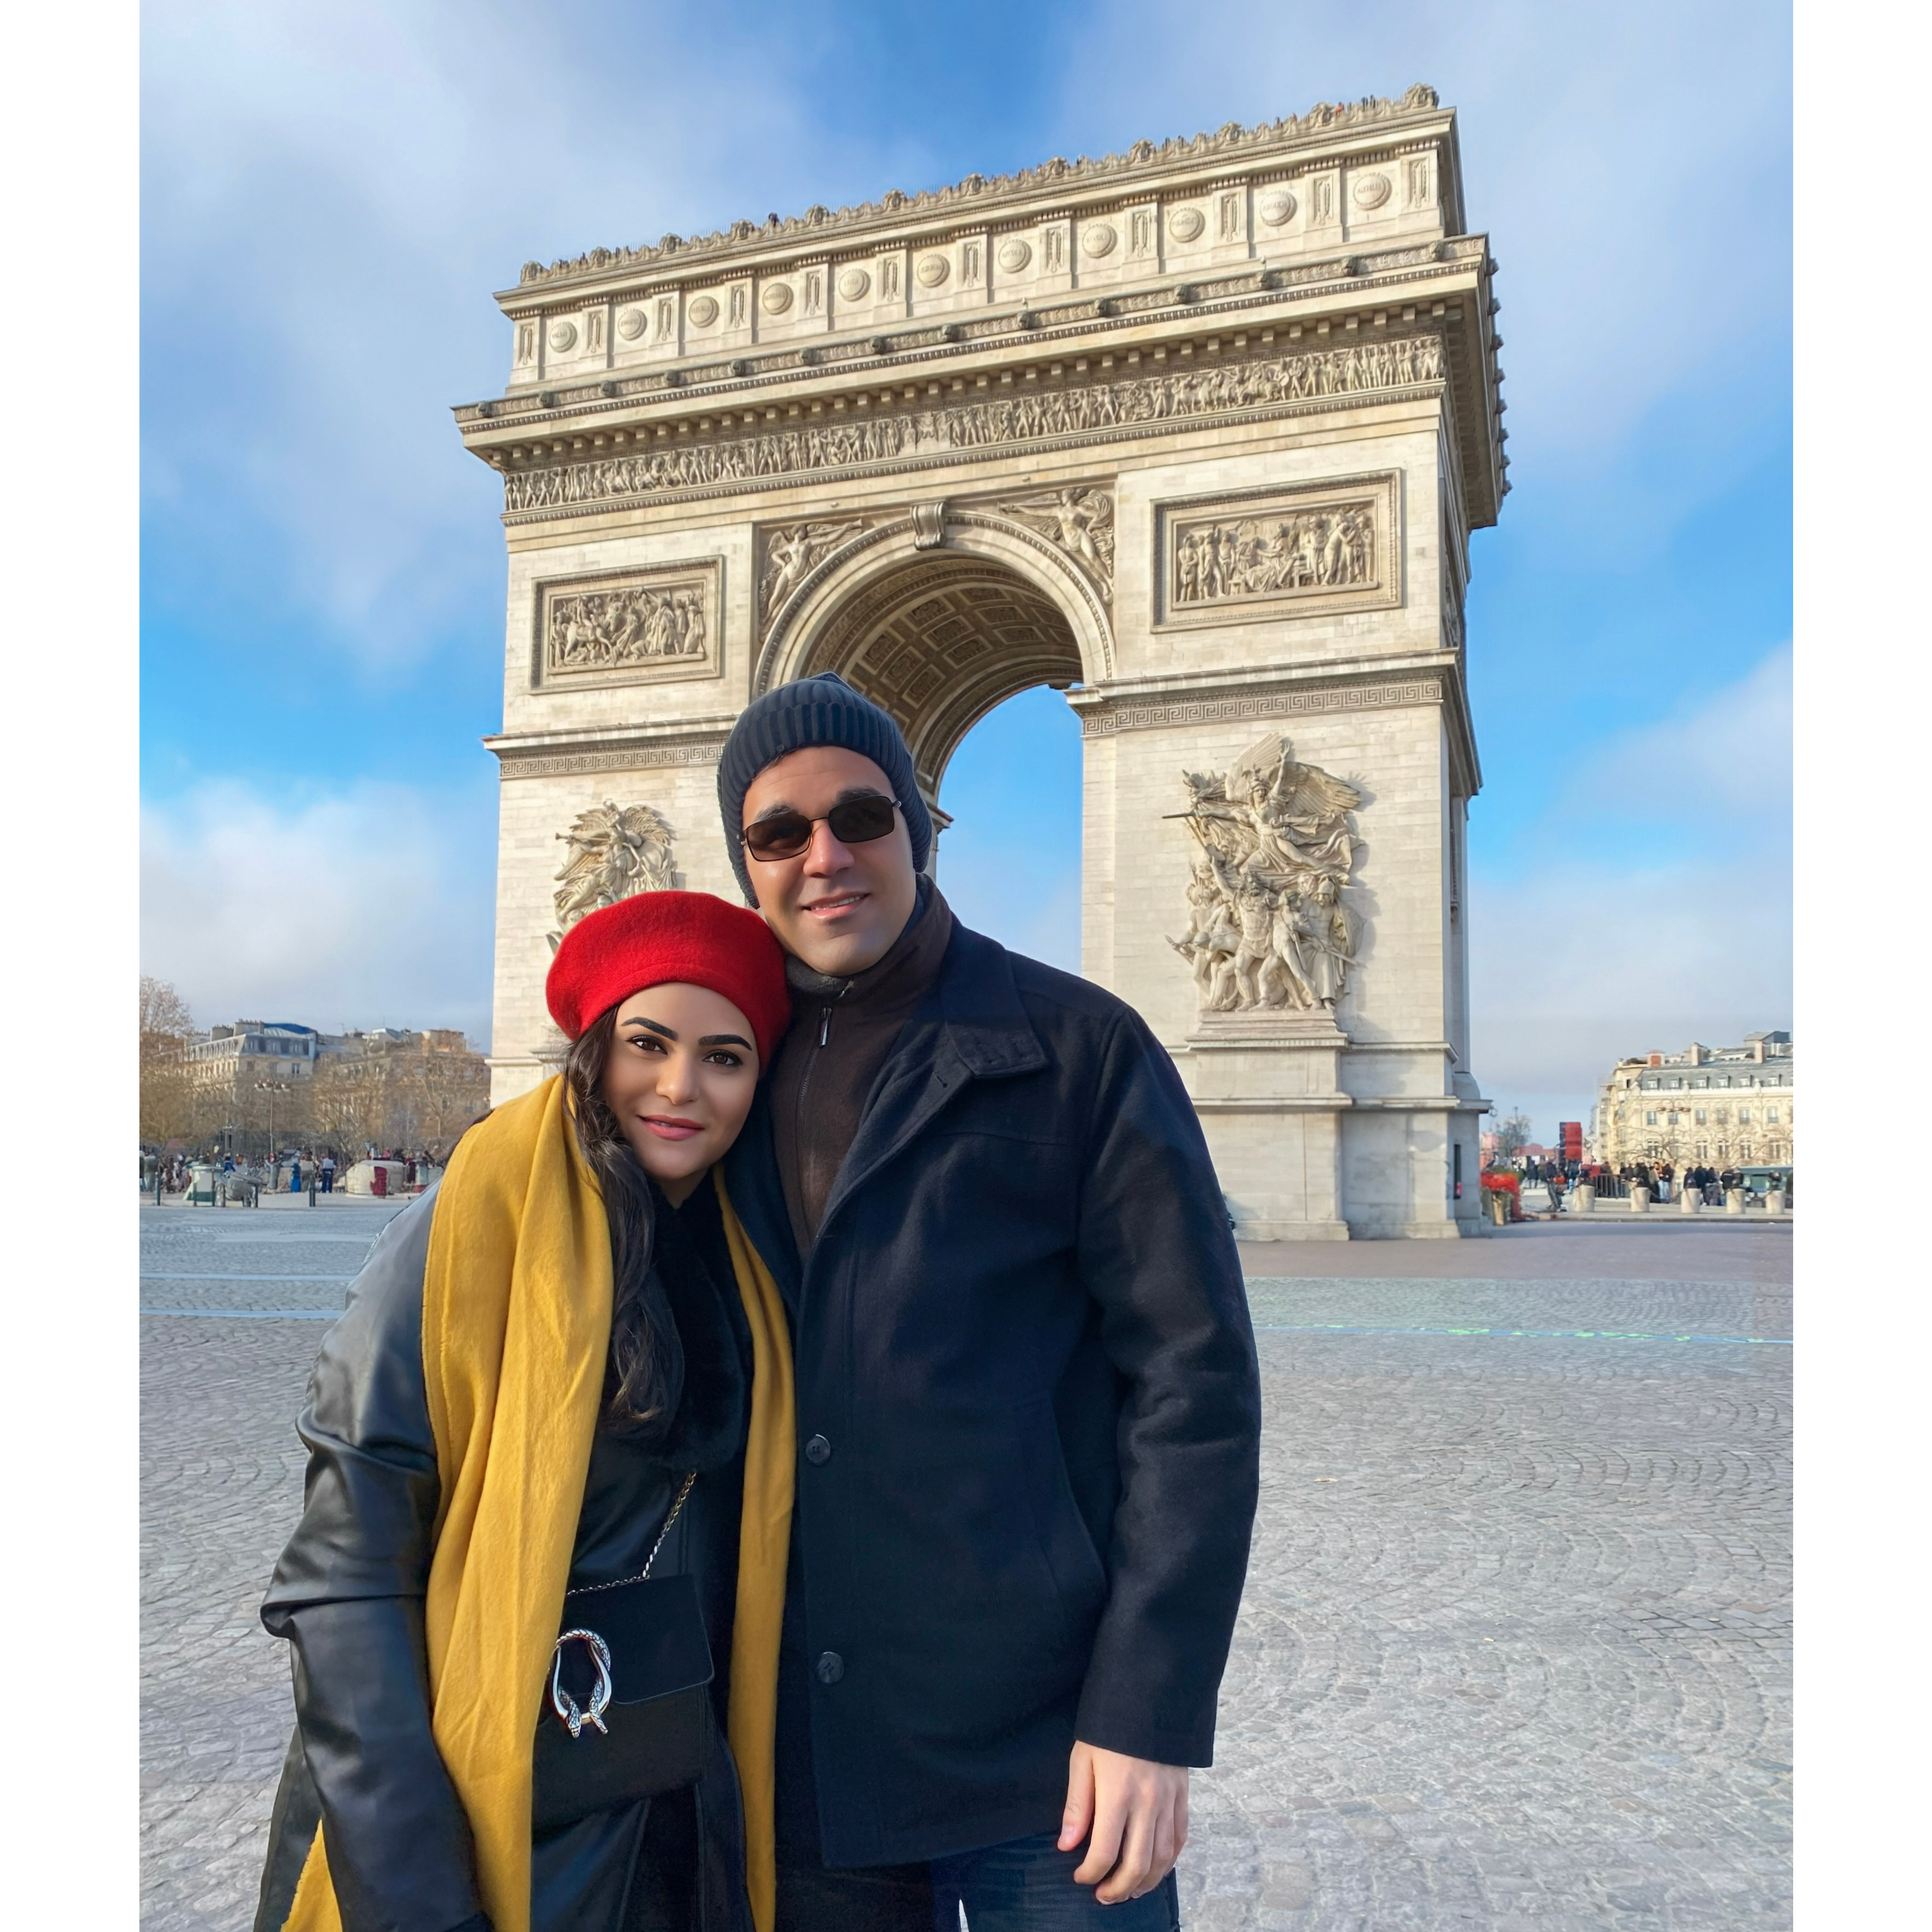 Visiting Arc de Triomphe